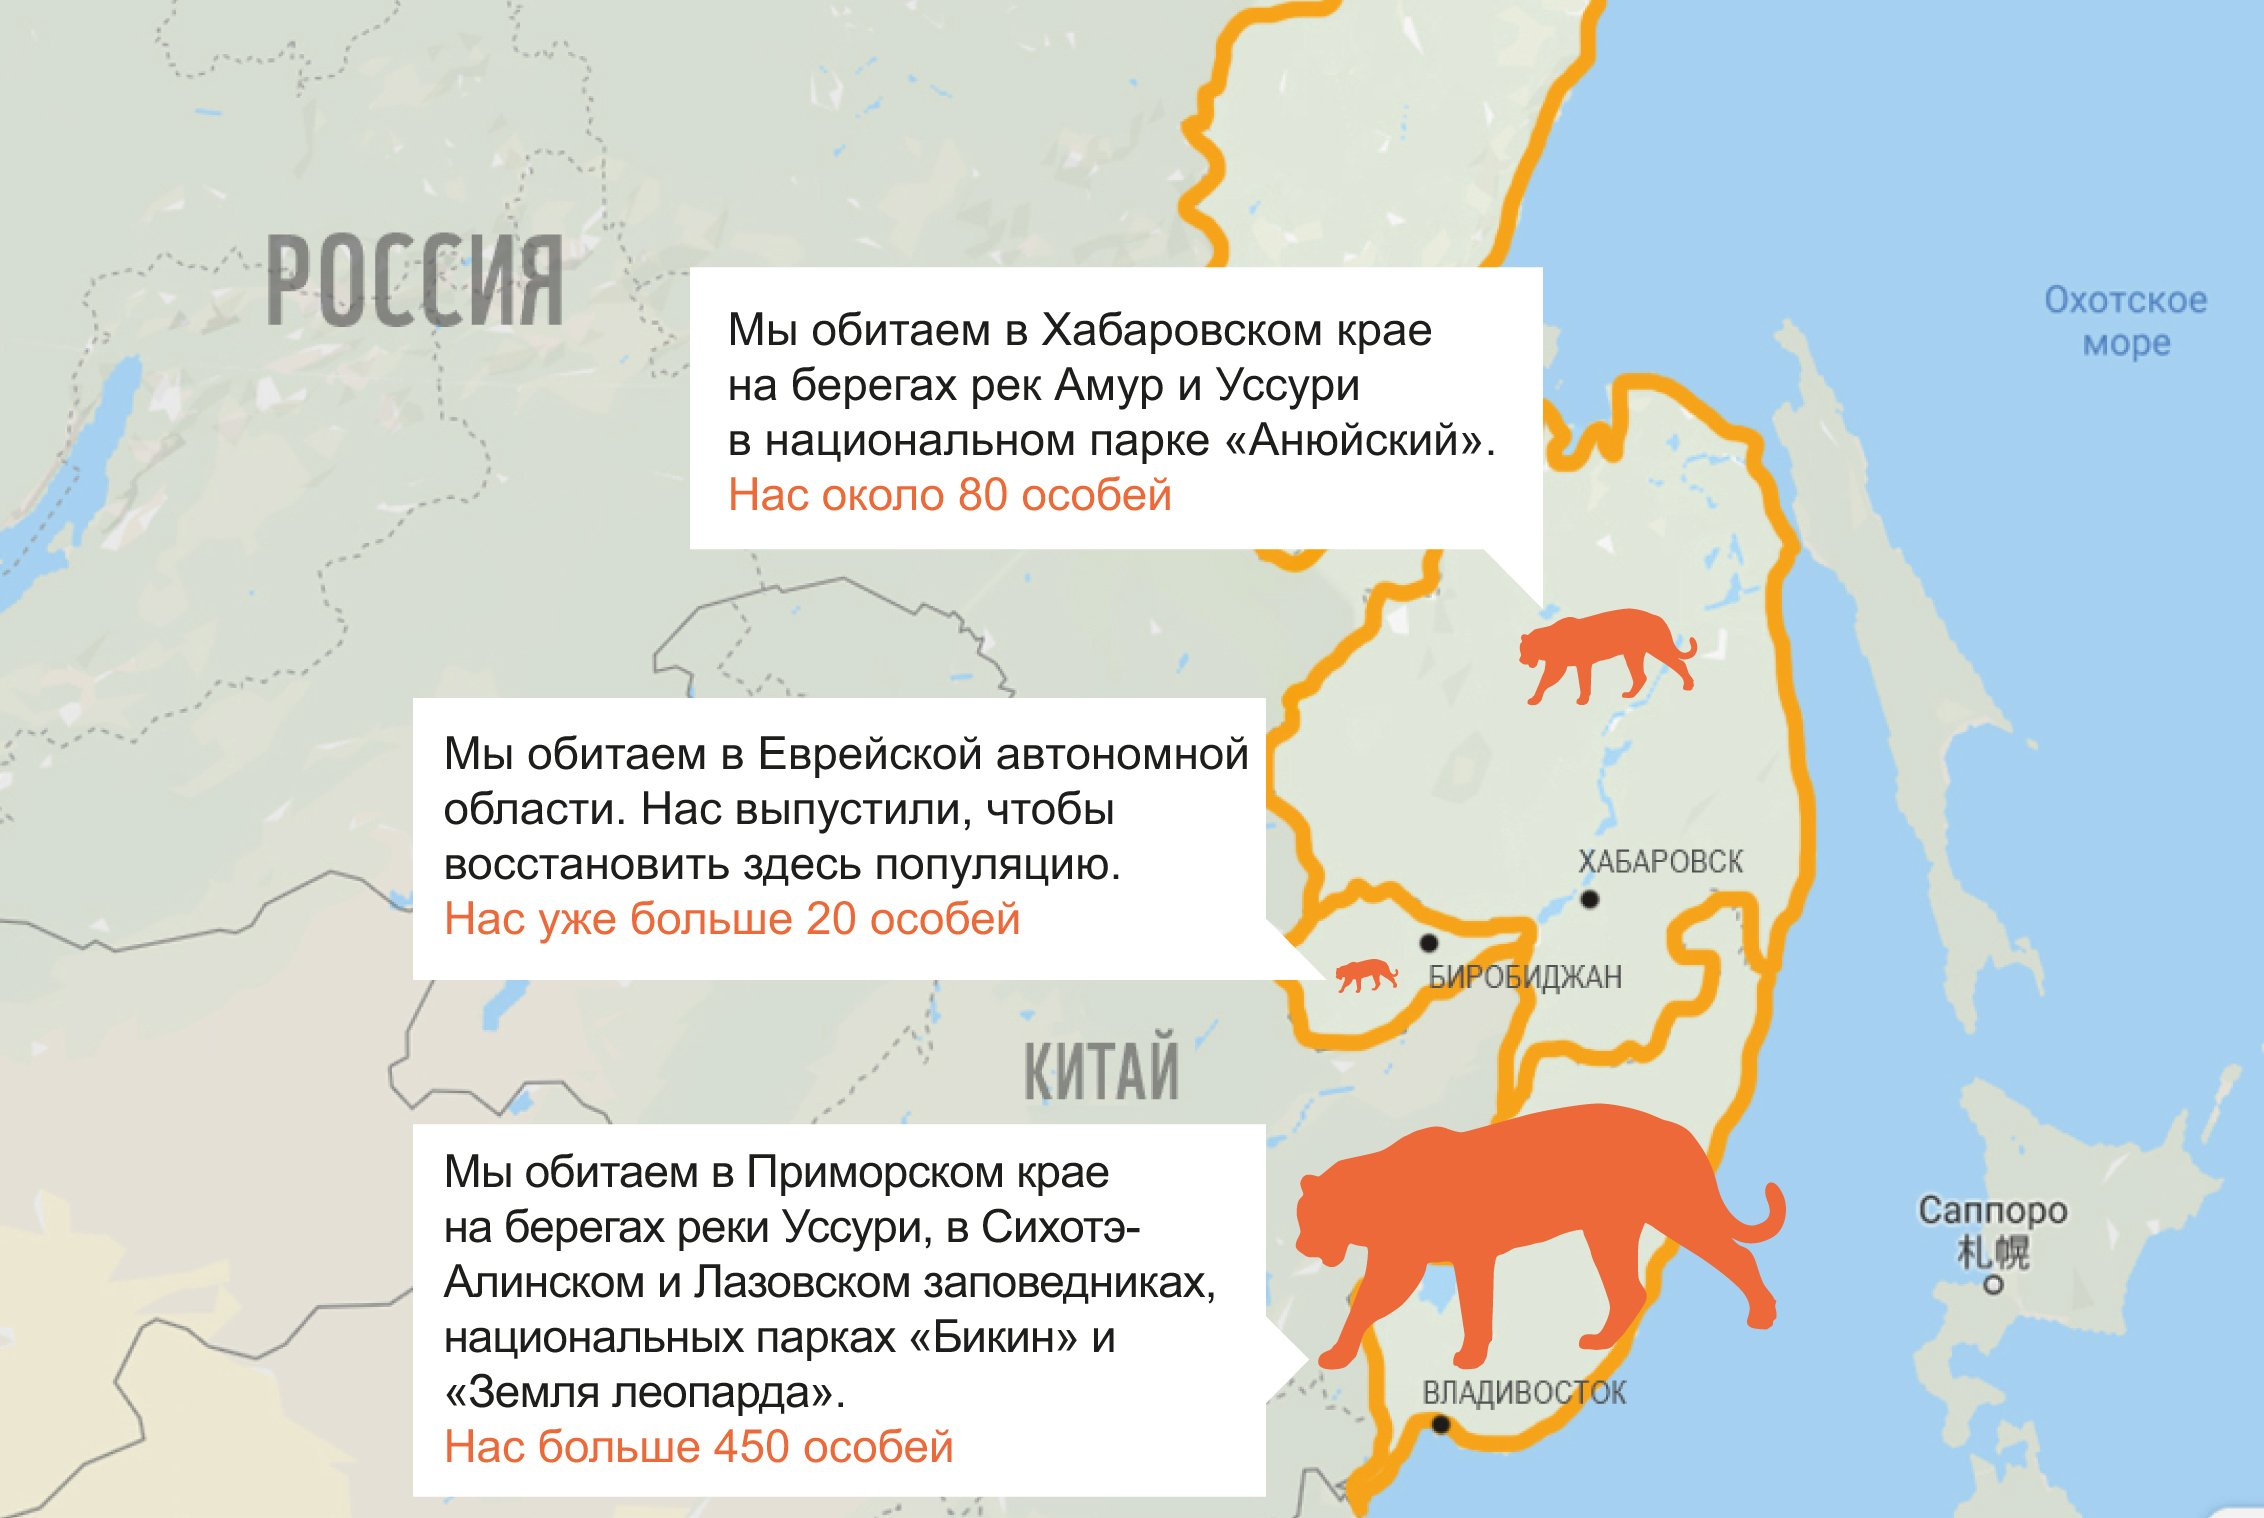 Тигр какое государство. Место обитания Амурского тигра. Амурский тигр ареал обитания в России. Где живет Амурский тигр на карте. Ареал обитания Амурского тигра.